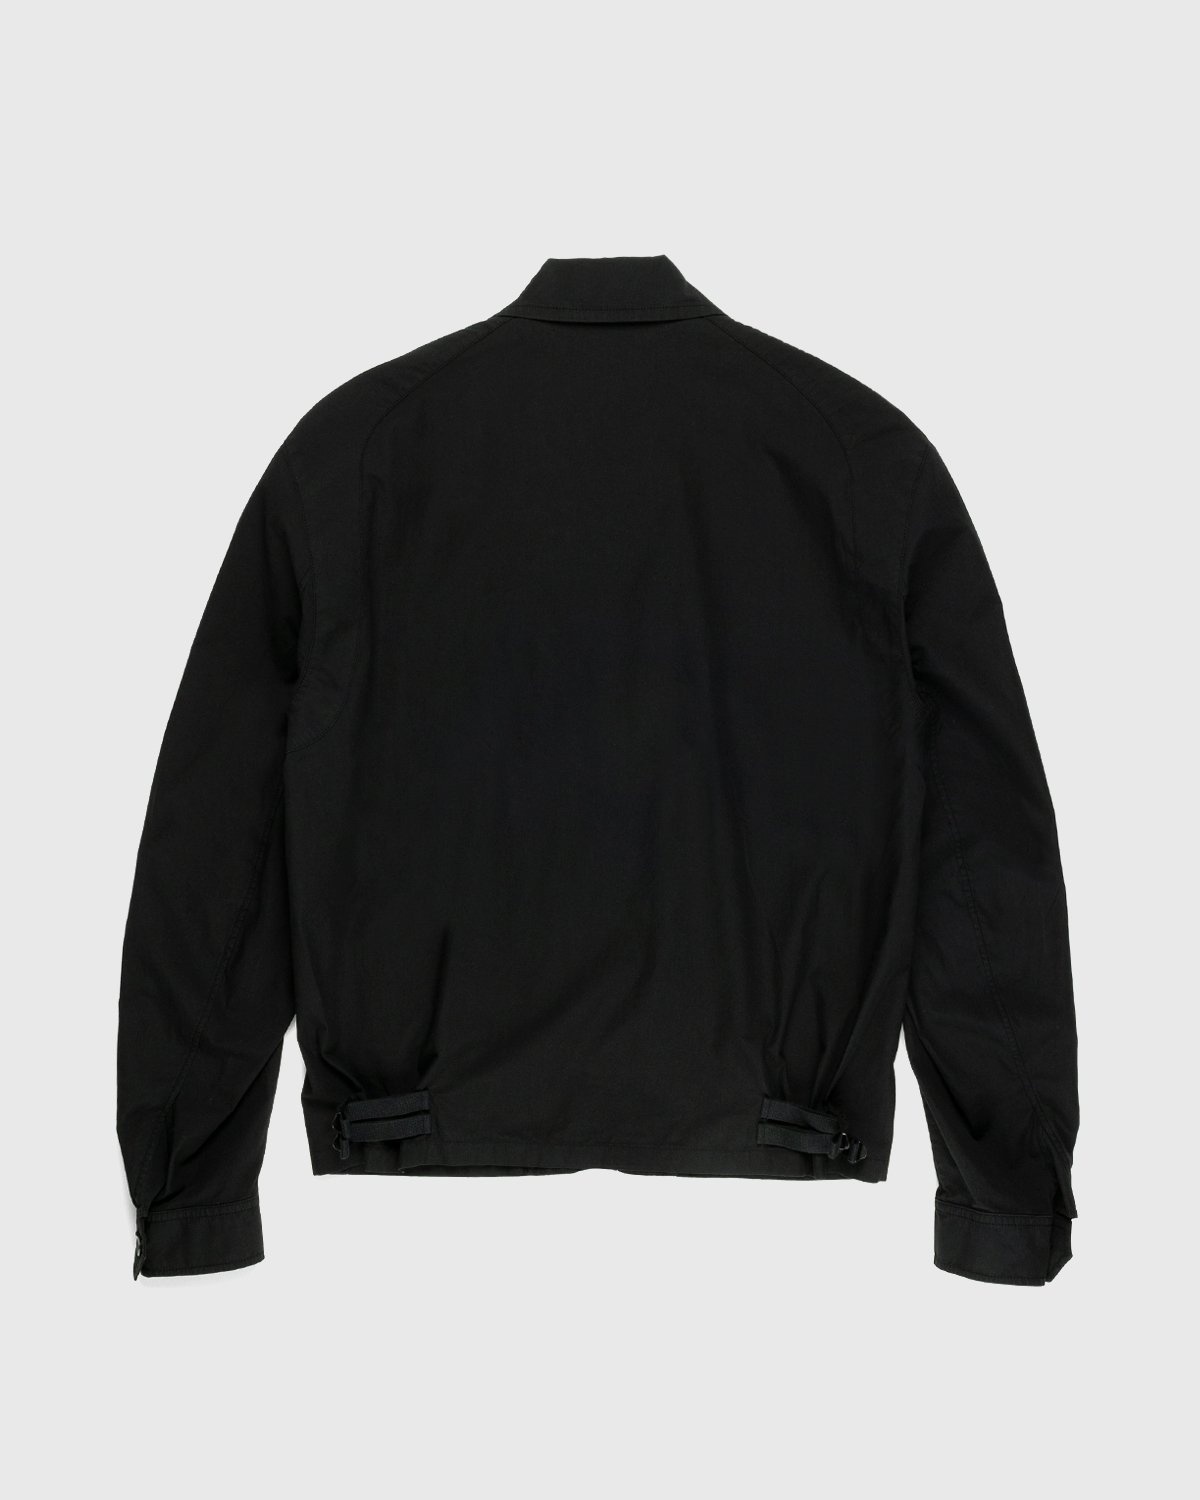 Lemaire – Shirt Blouson Black - Shirts - Black - Image 2